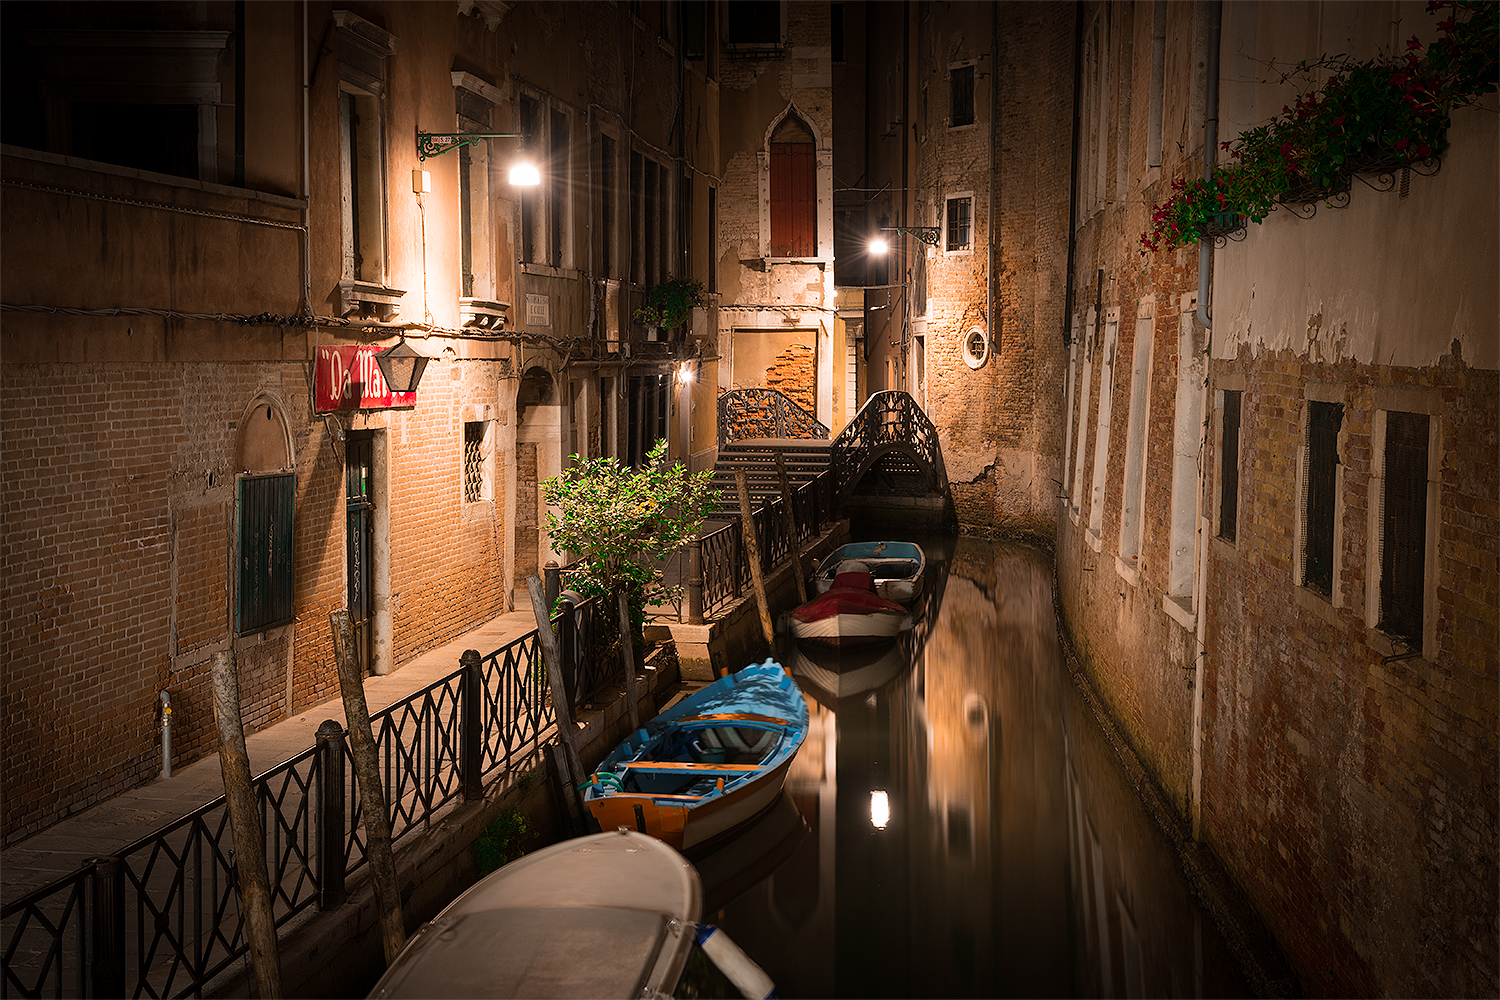 Venice at Night - 2